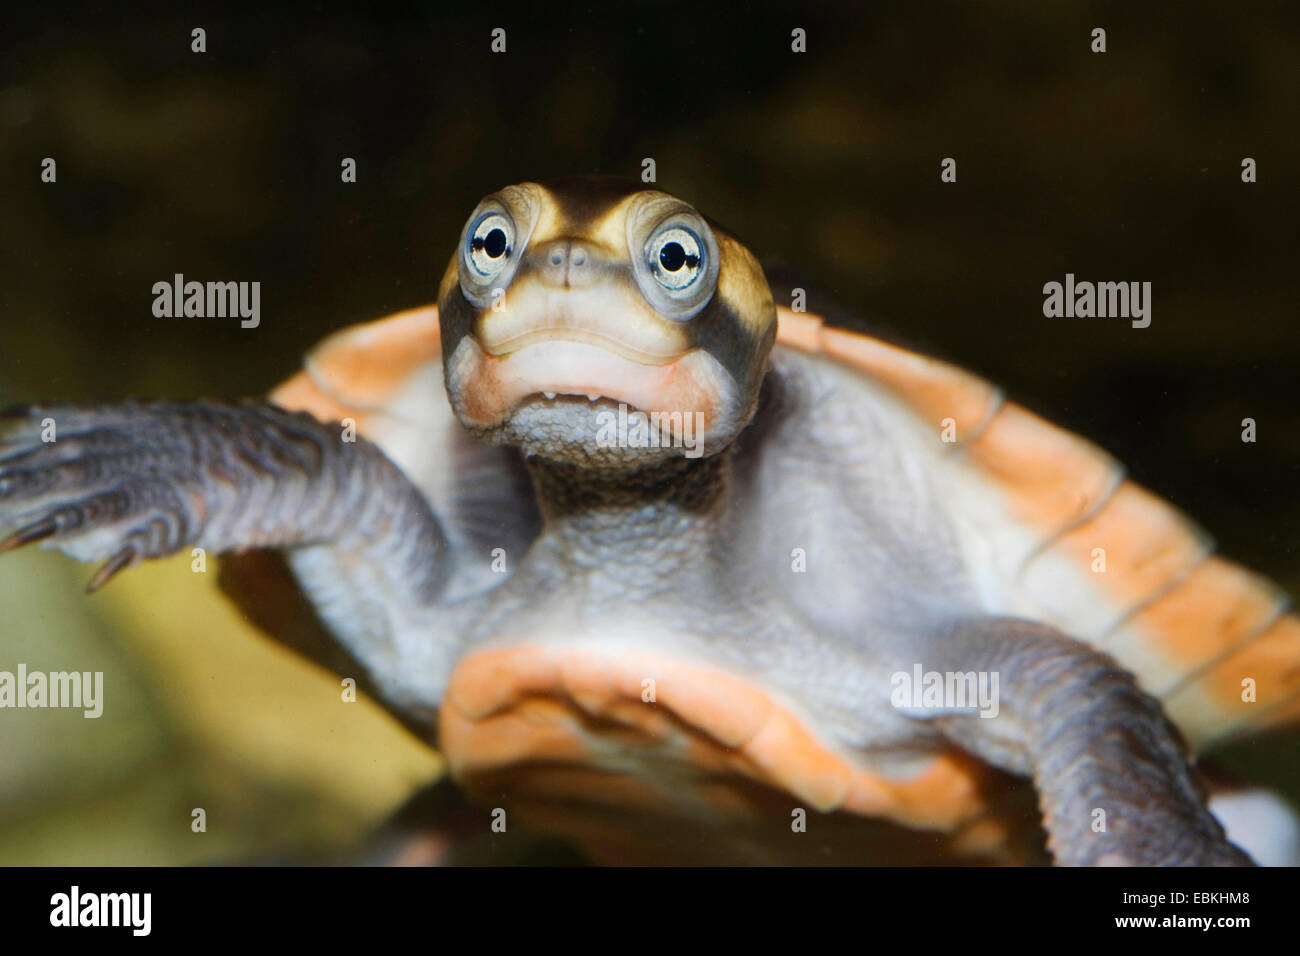 red-bellied short-necked turtle (Emydura subglobosa, Emydura albertisii), portrait Stock Photo